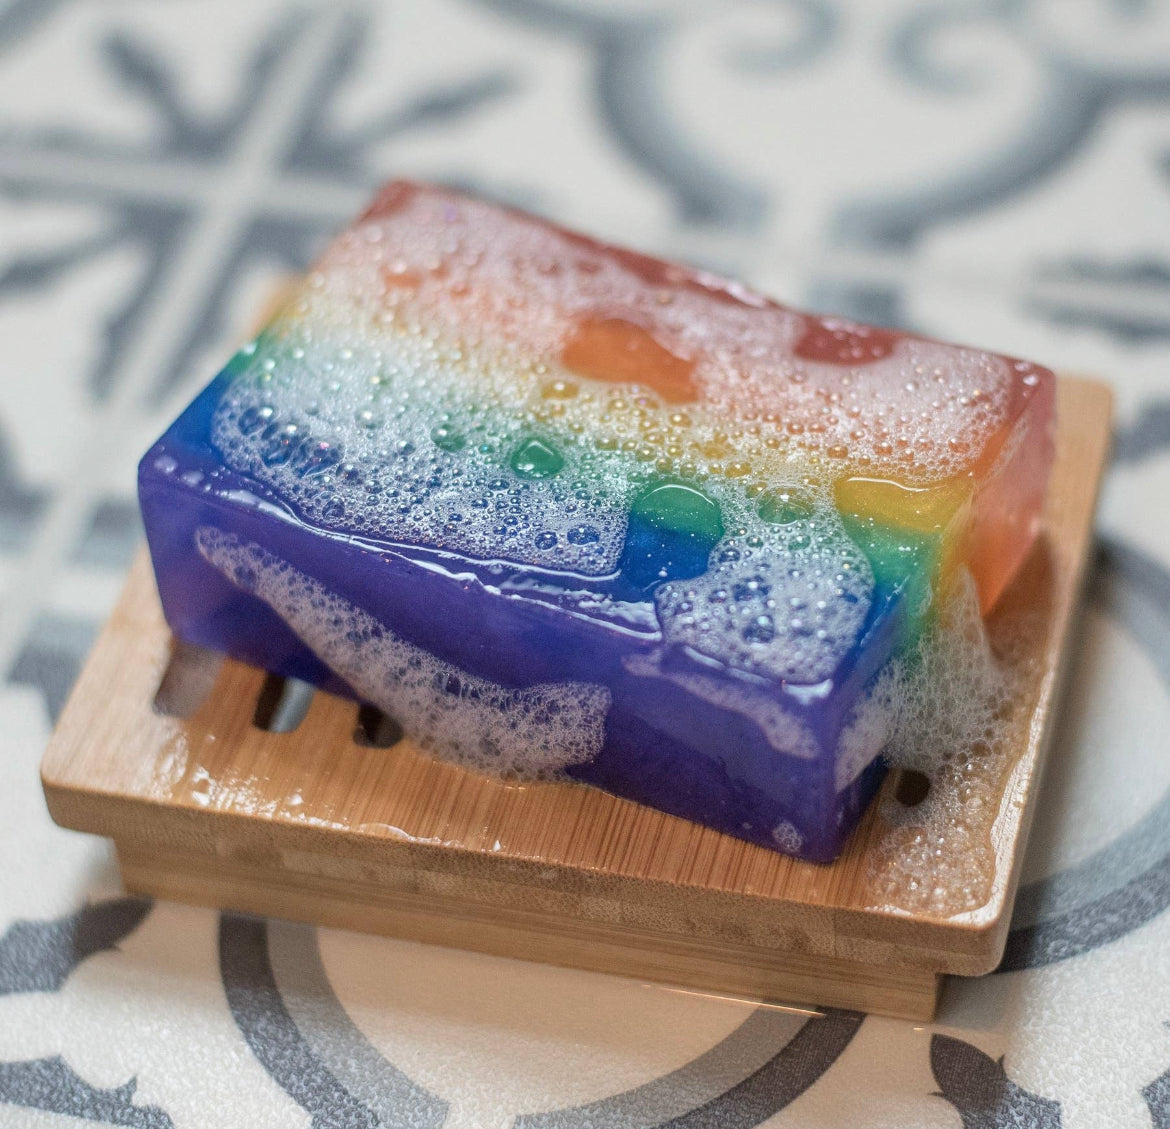 Gay Bar Handmade Soap Slice